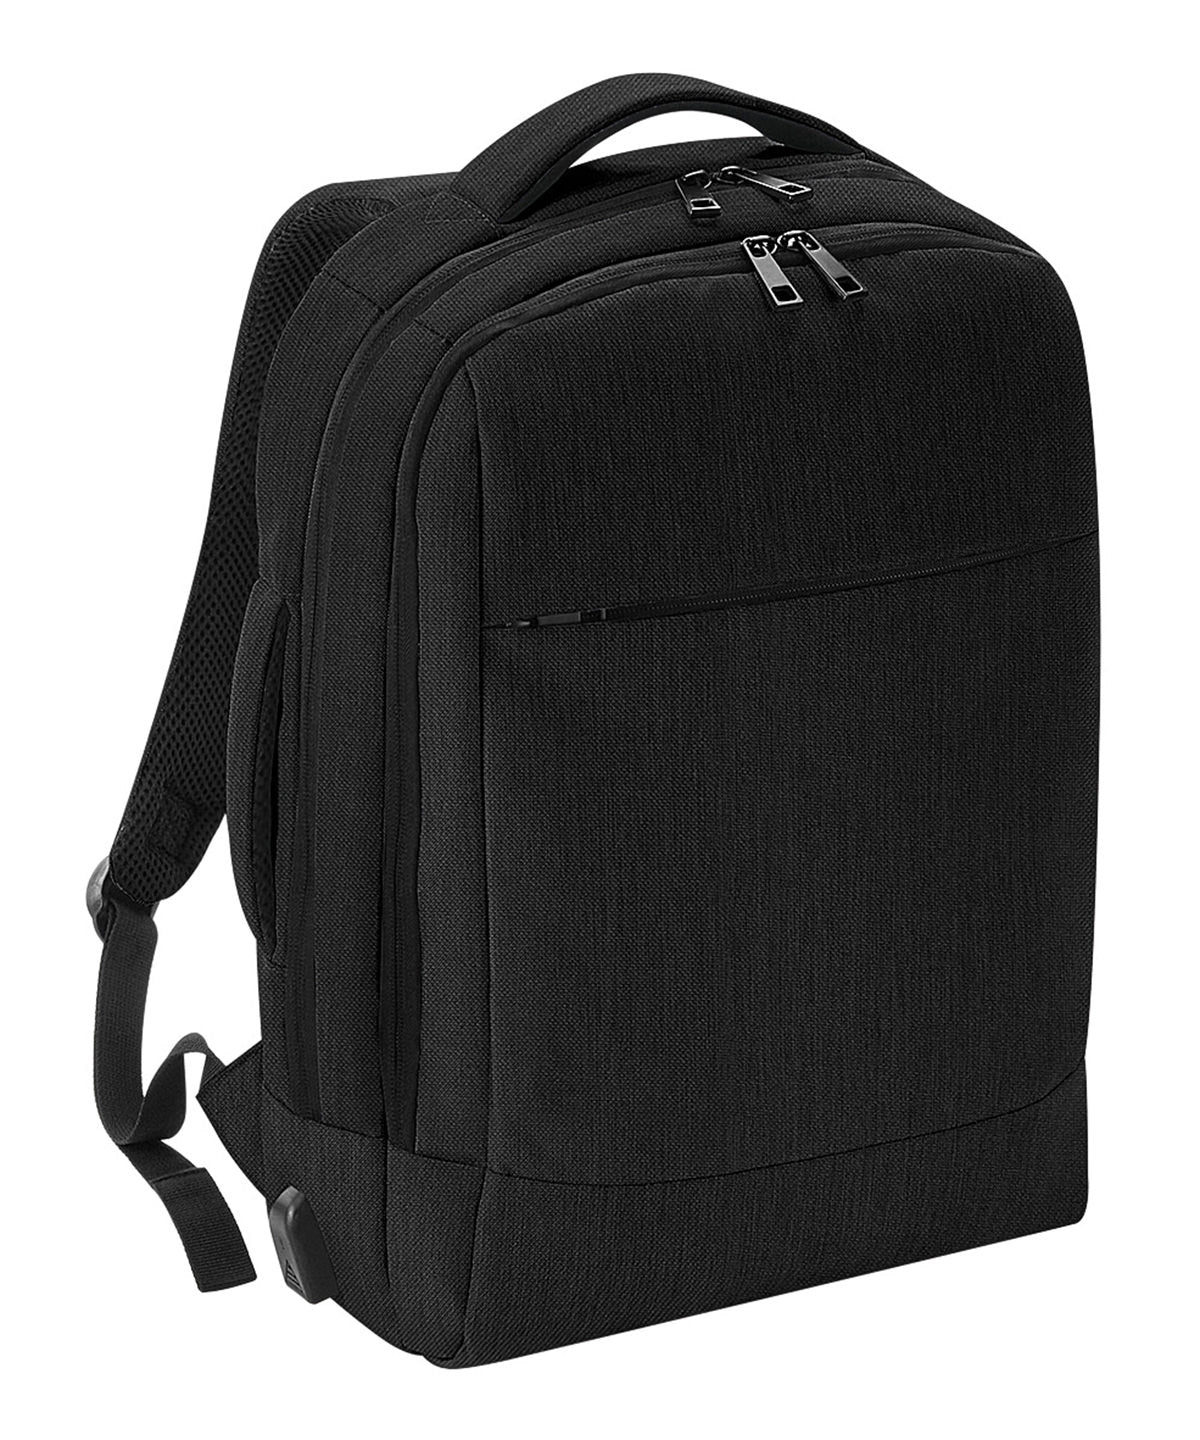 Töskur - Q-Tech Charge Convertible Backpack